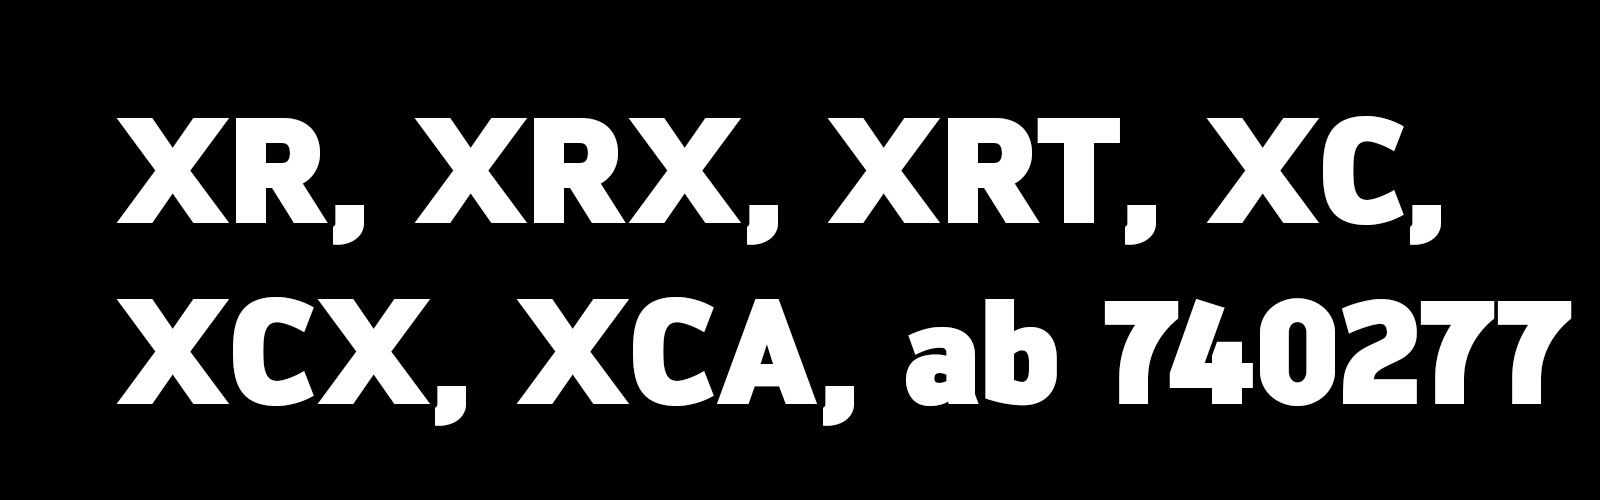 XR, XRX, XRT, XC, XCX, XCA Ab 740277